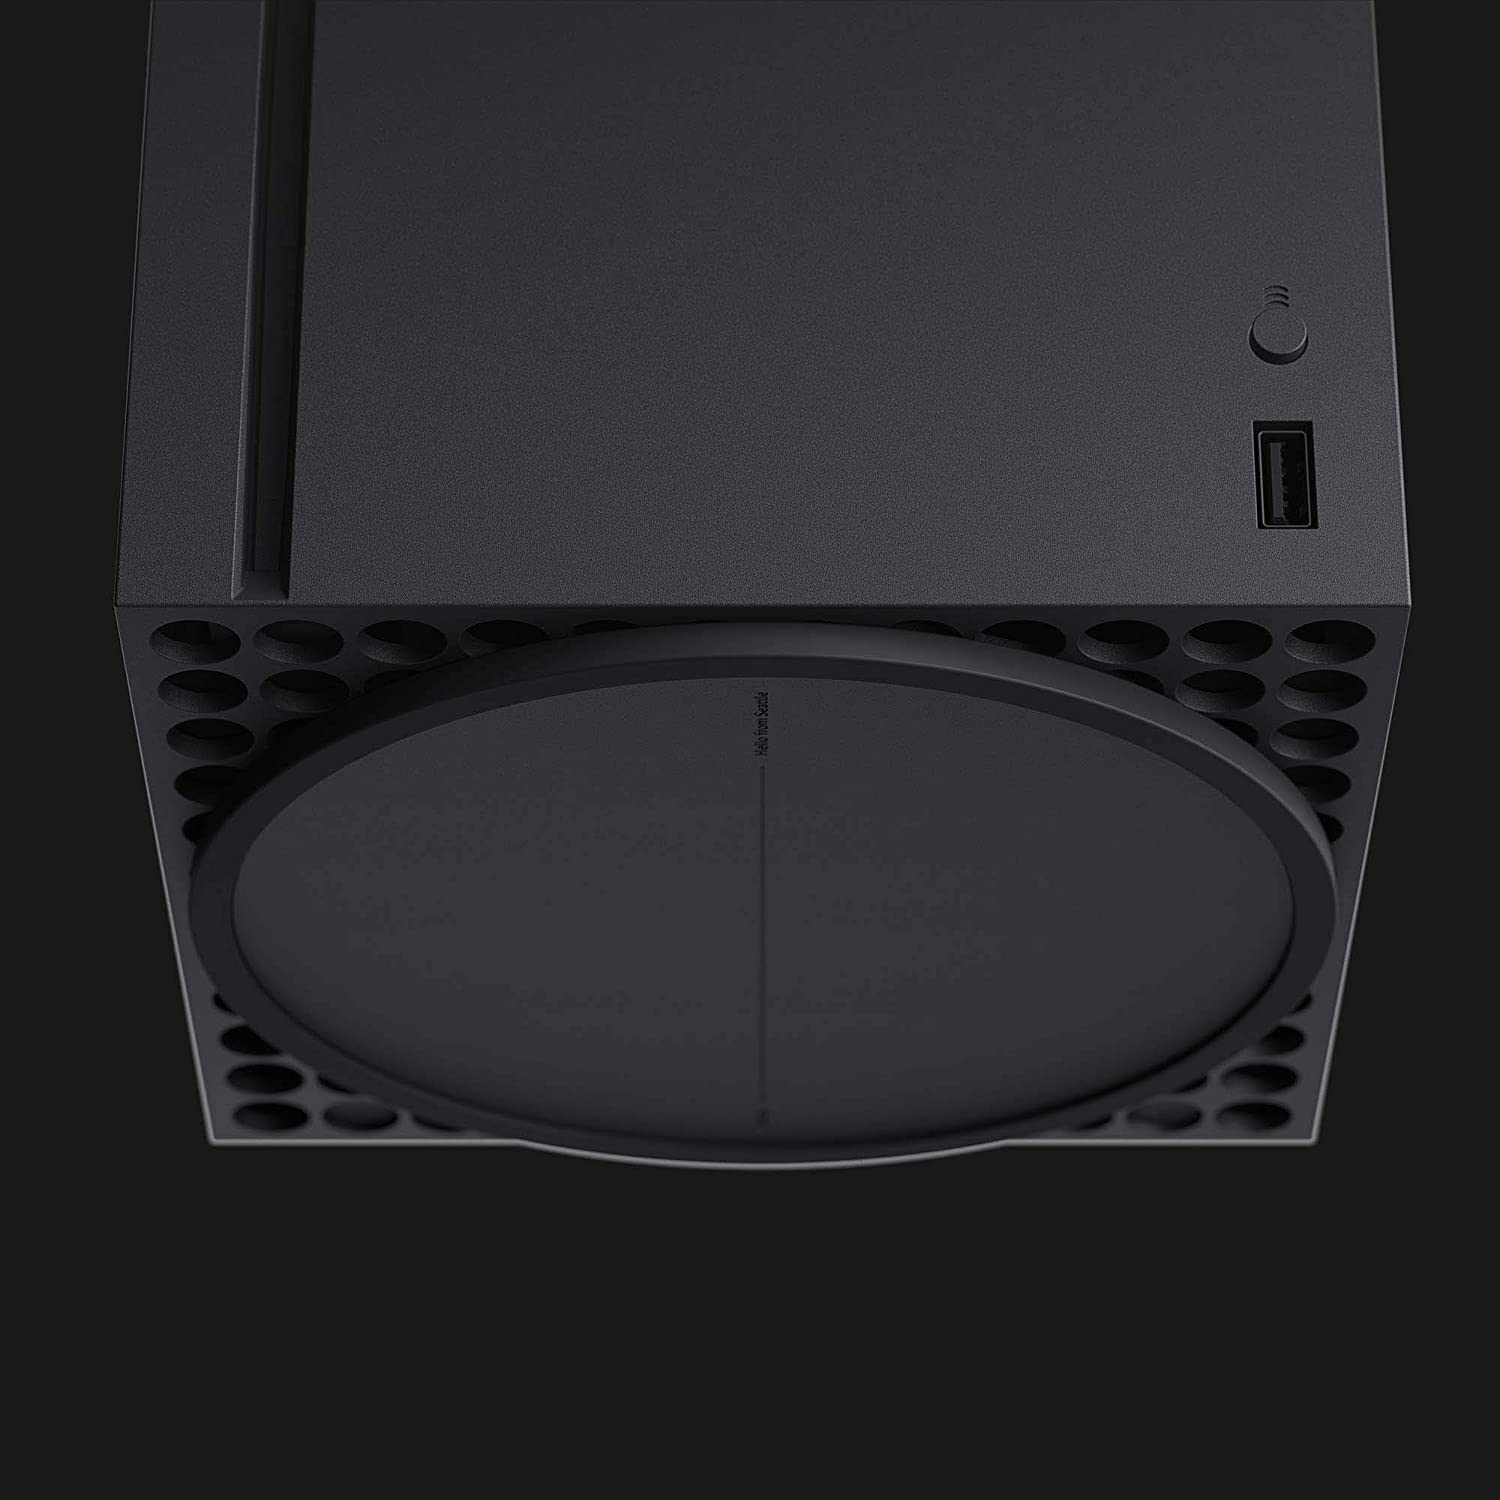 Microsoft Xbox Series X 1TB Video Game Console Microsoft